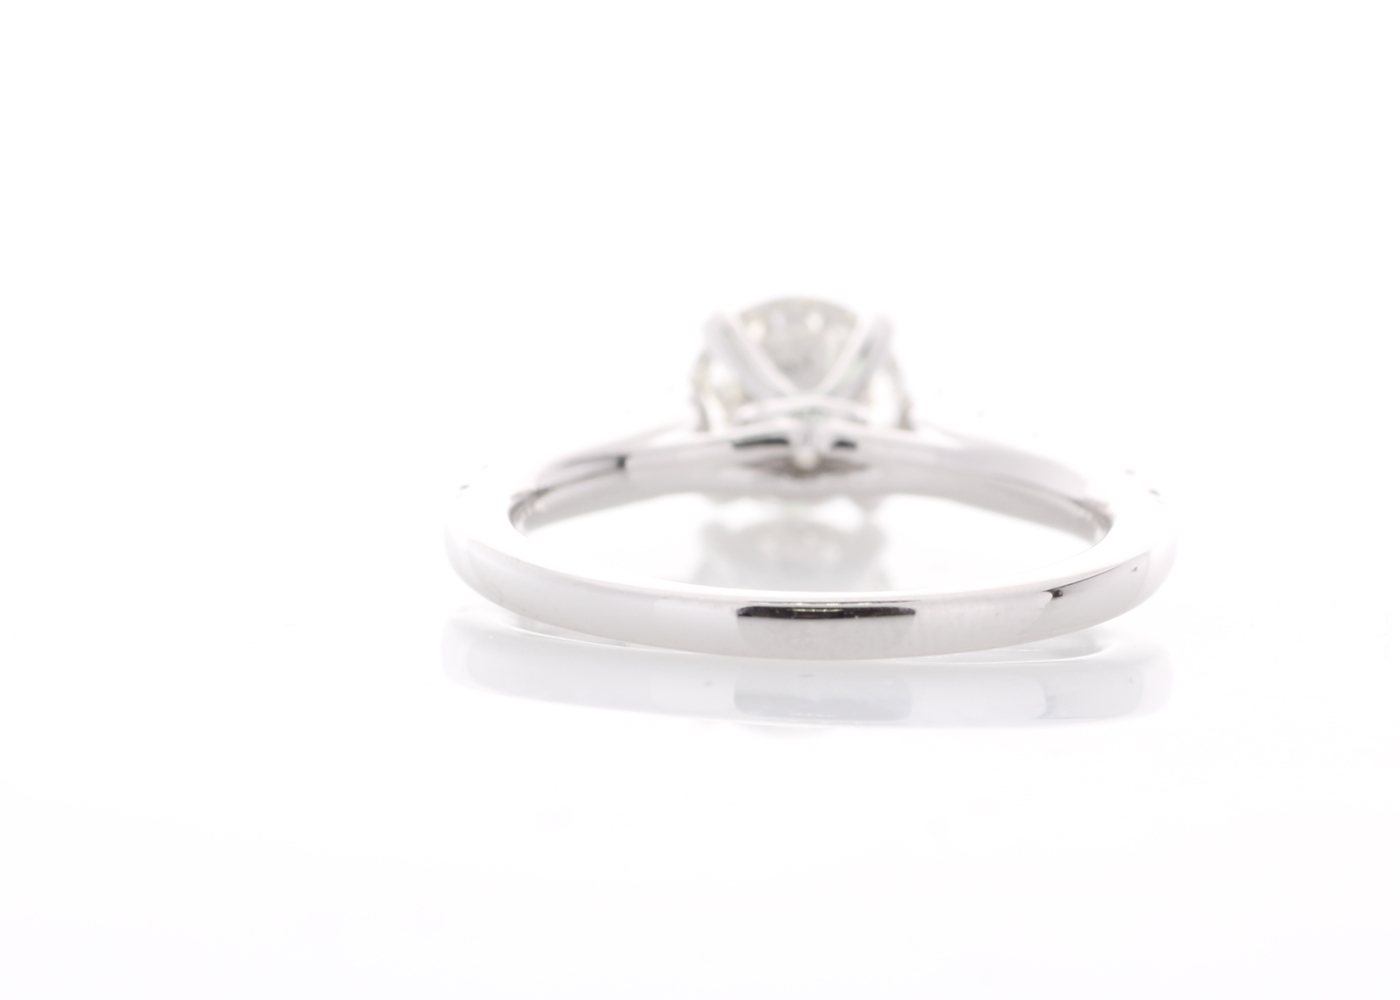 18ct White Gold Single Stone Prong Set With Stone Set Shoulders Diamond Ring (1.07) 1.47 Carats - Image 3 of 5